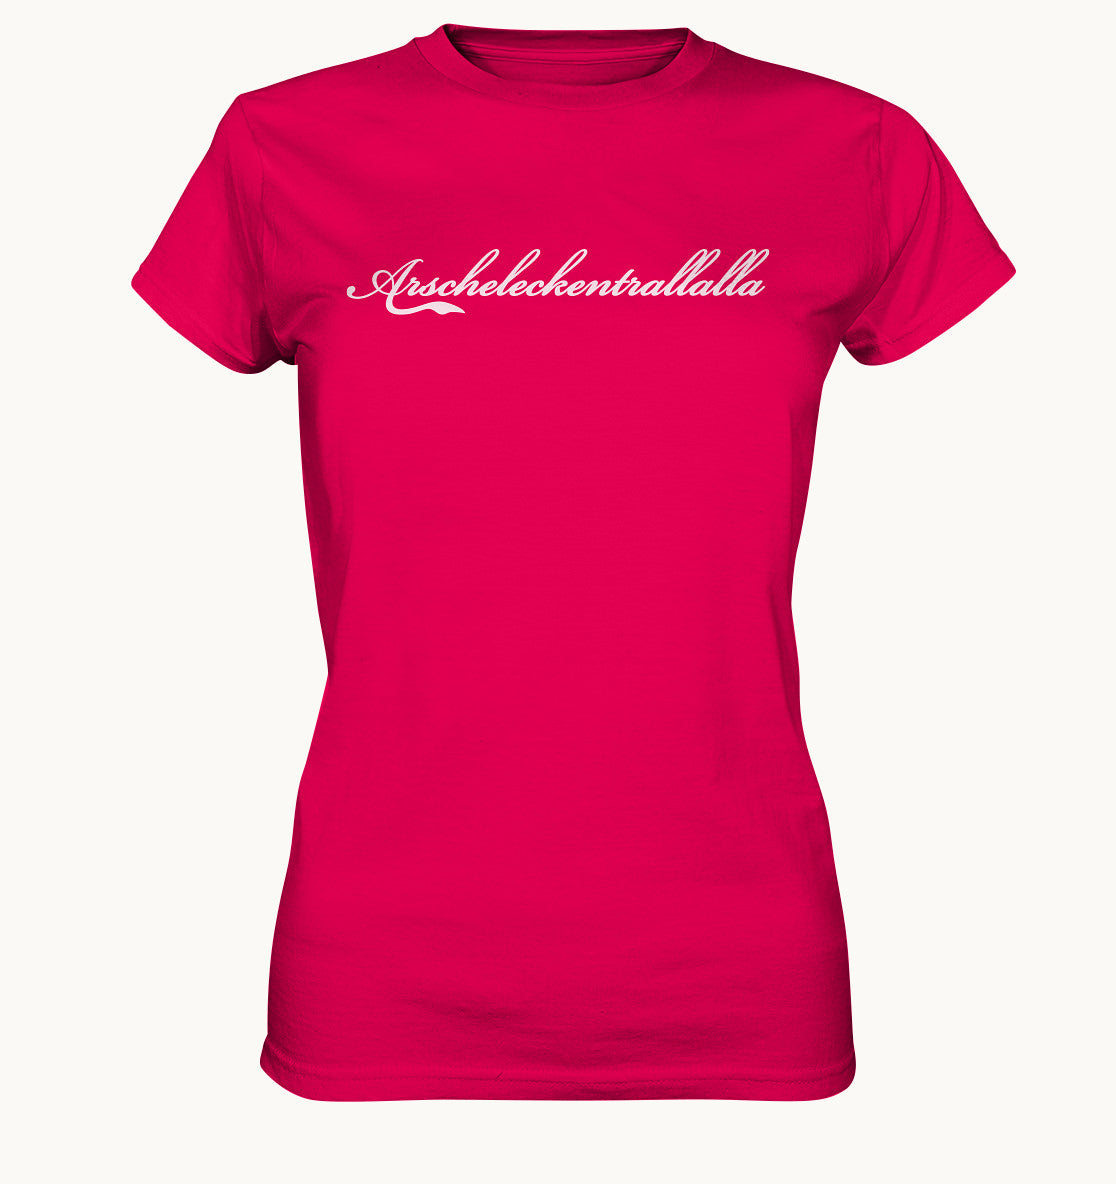 Arscheleckentrallalla - Frauen Shirt - Baufun Shop